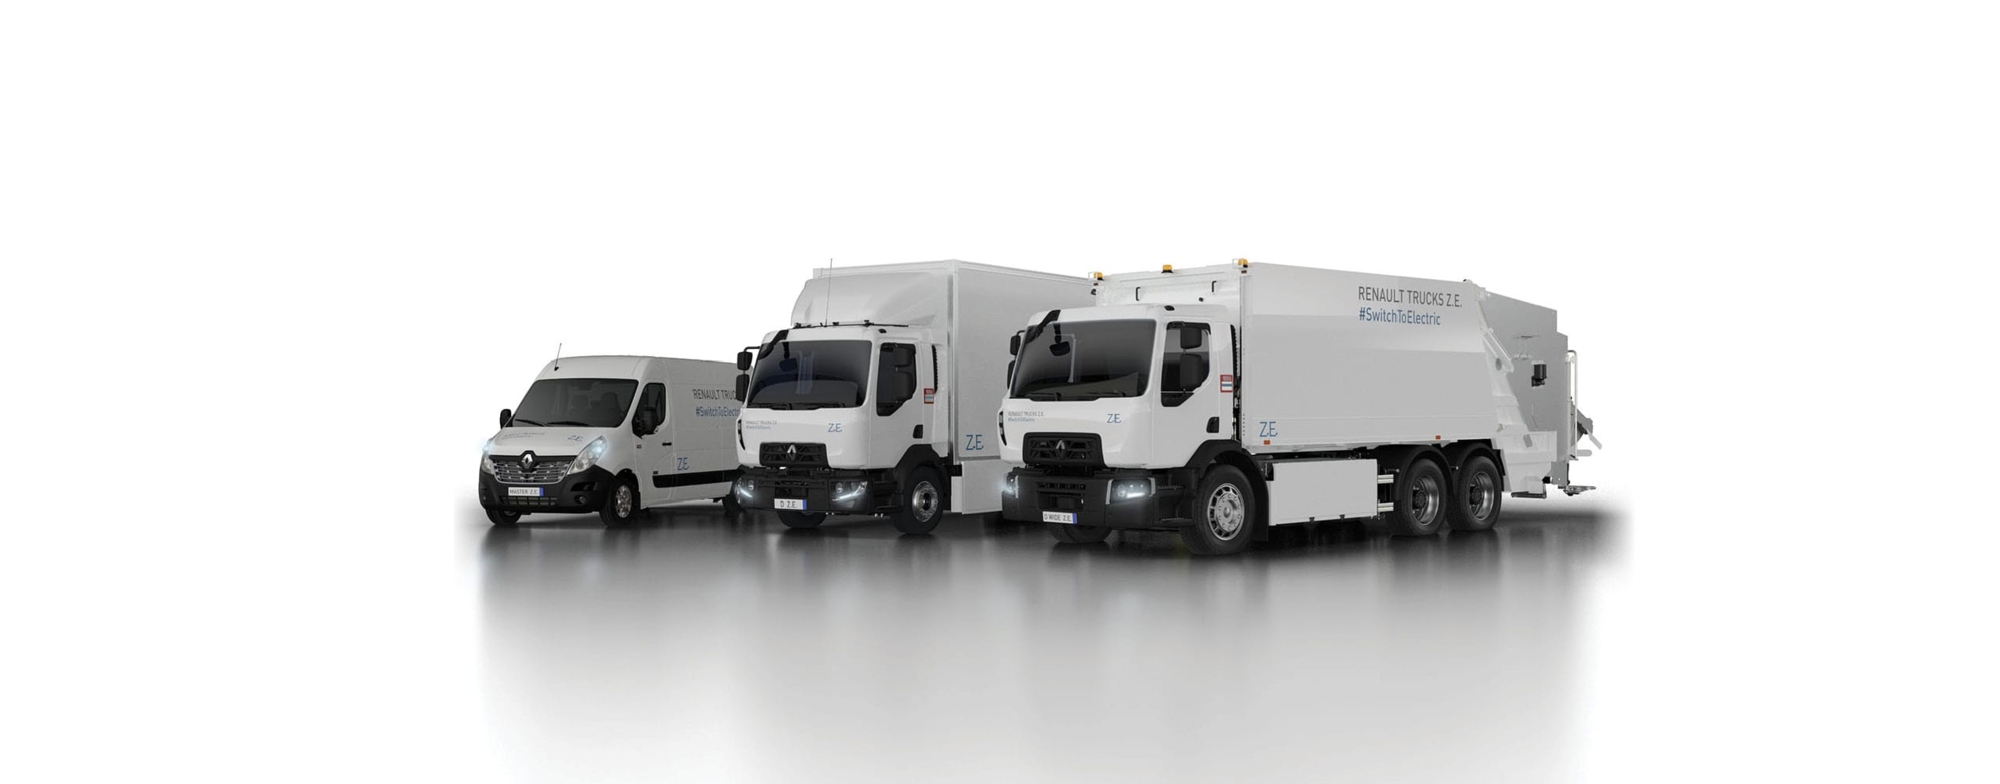 pb-rt-elektrische-trucks-2560.jpg